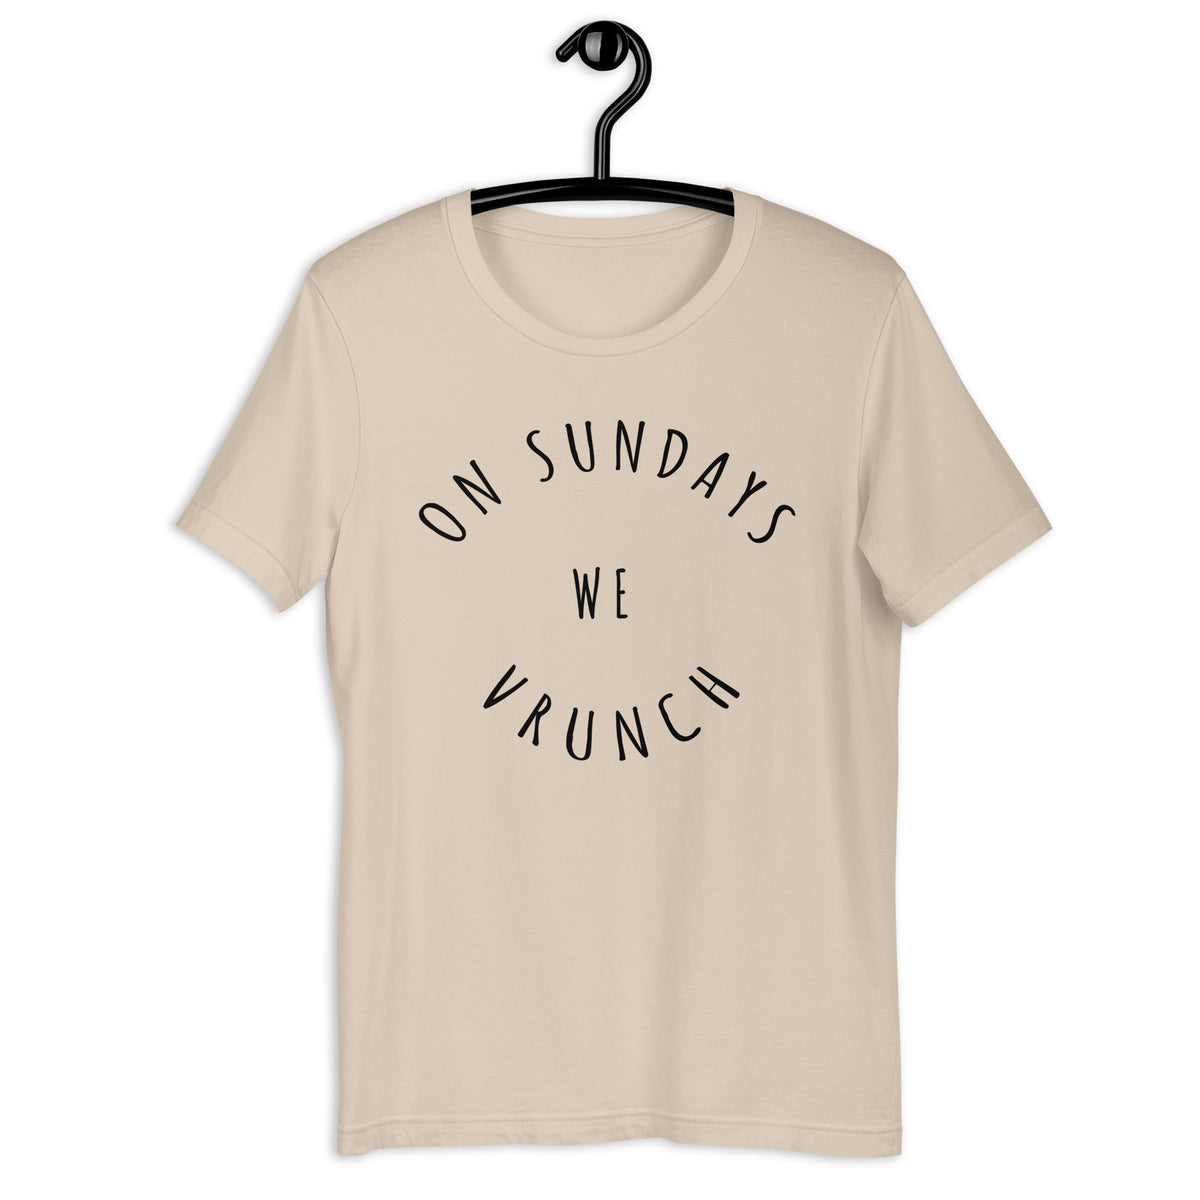 ON SUNDAYS WE VRUNCH t-shirt